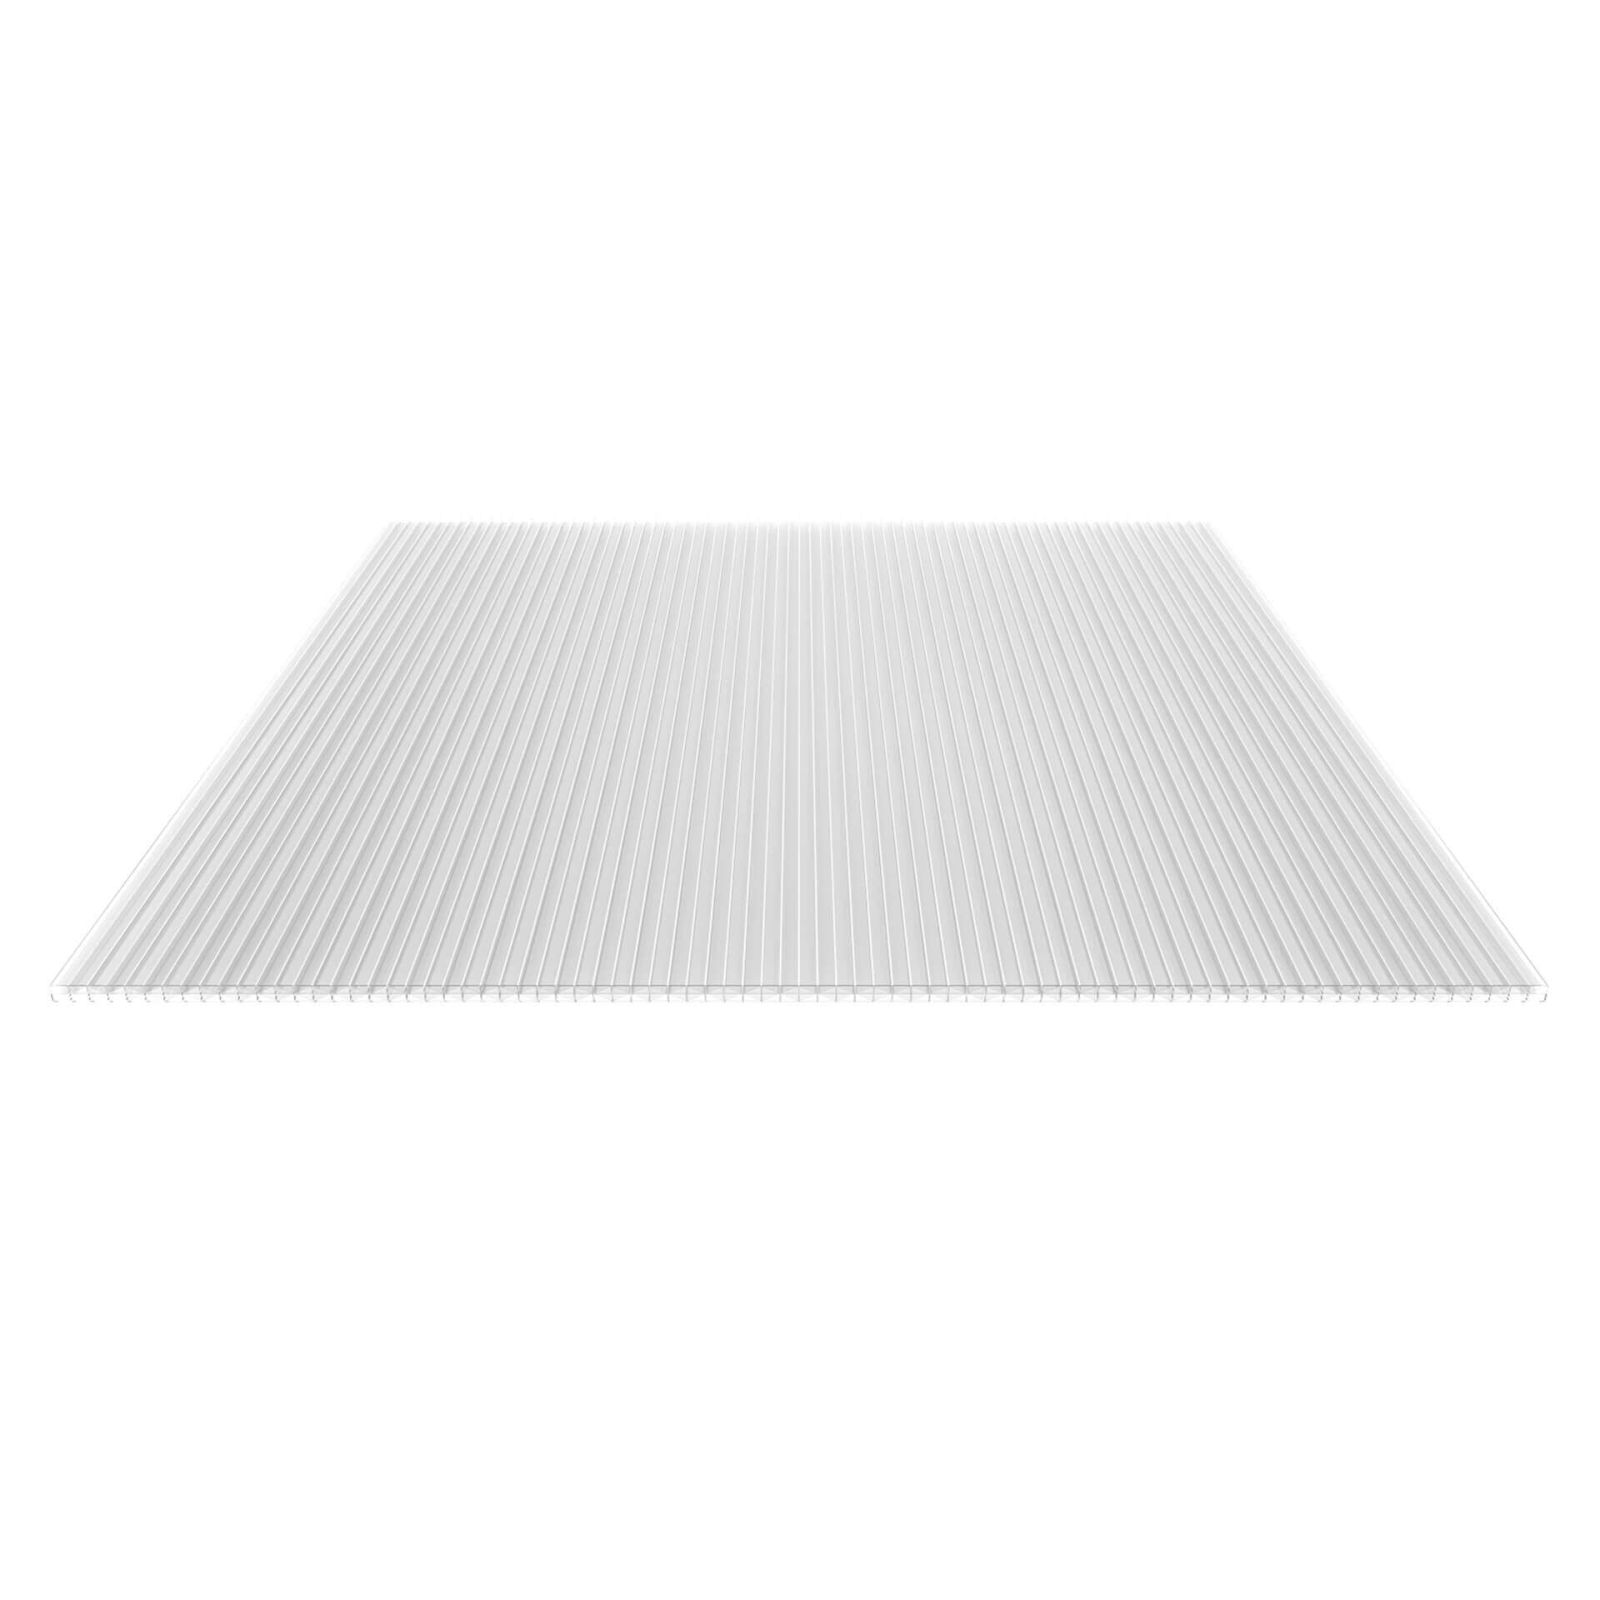 Polycarbonat Stegplatte | 16 mm | Breite 980 mm | Klar | Extra stark | 500 mm